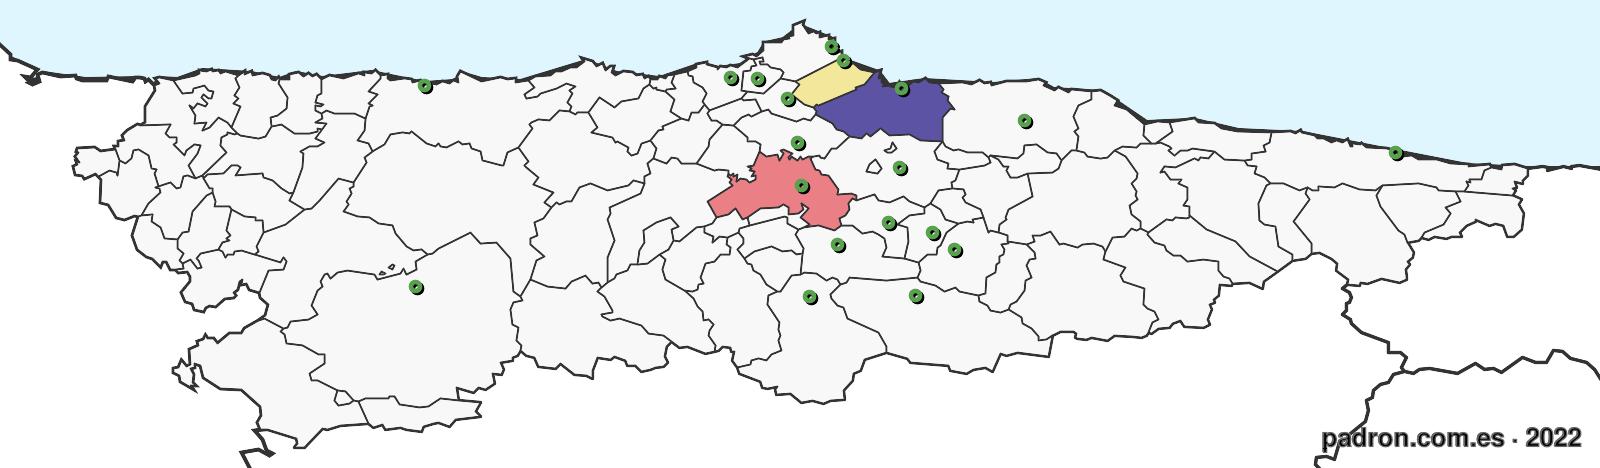 afganos en asturias.